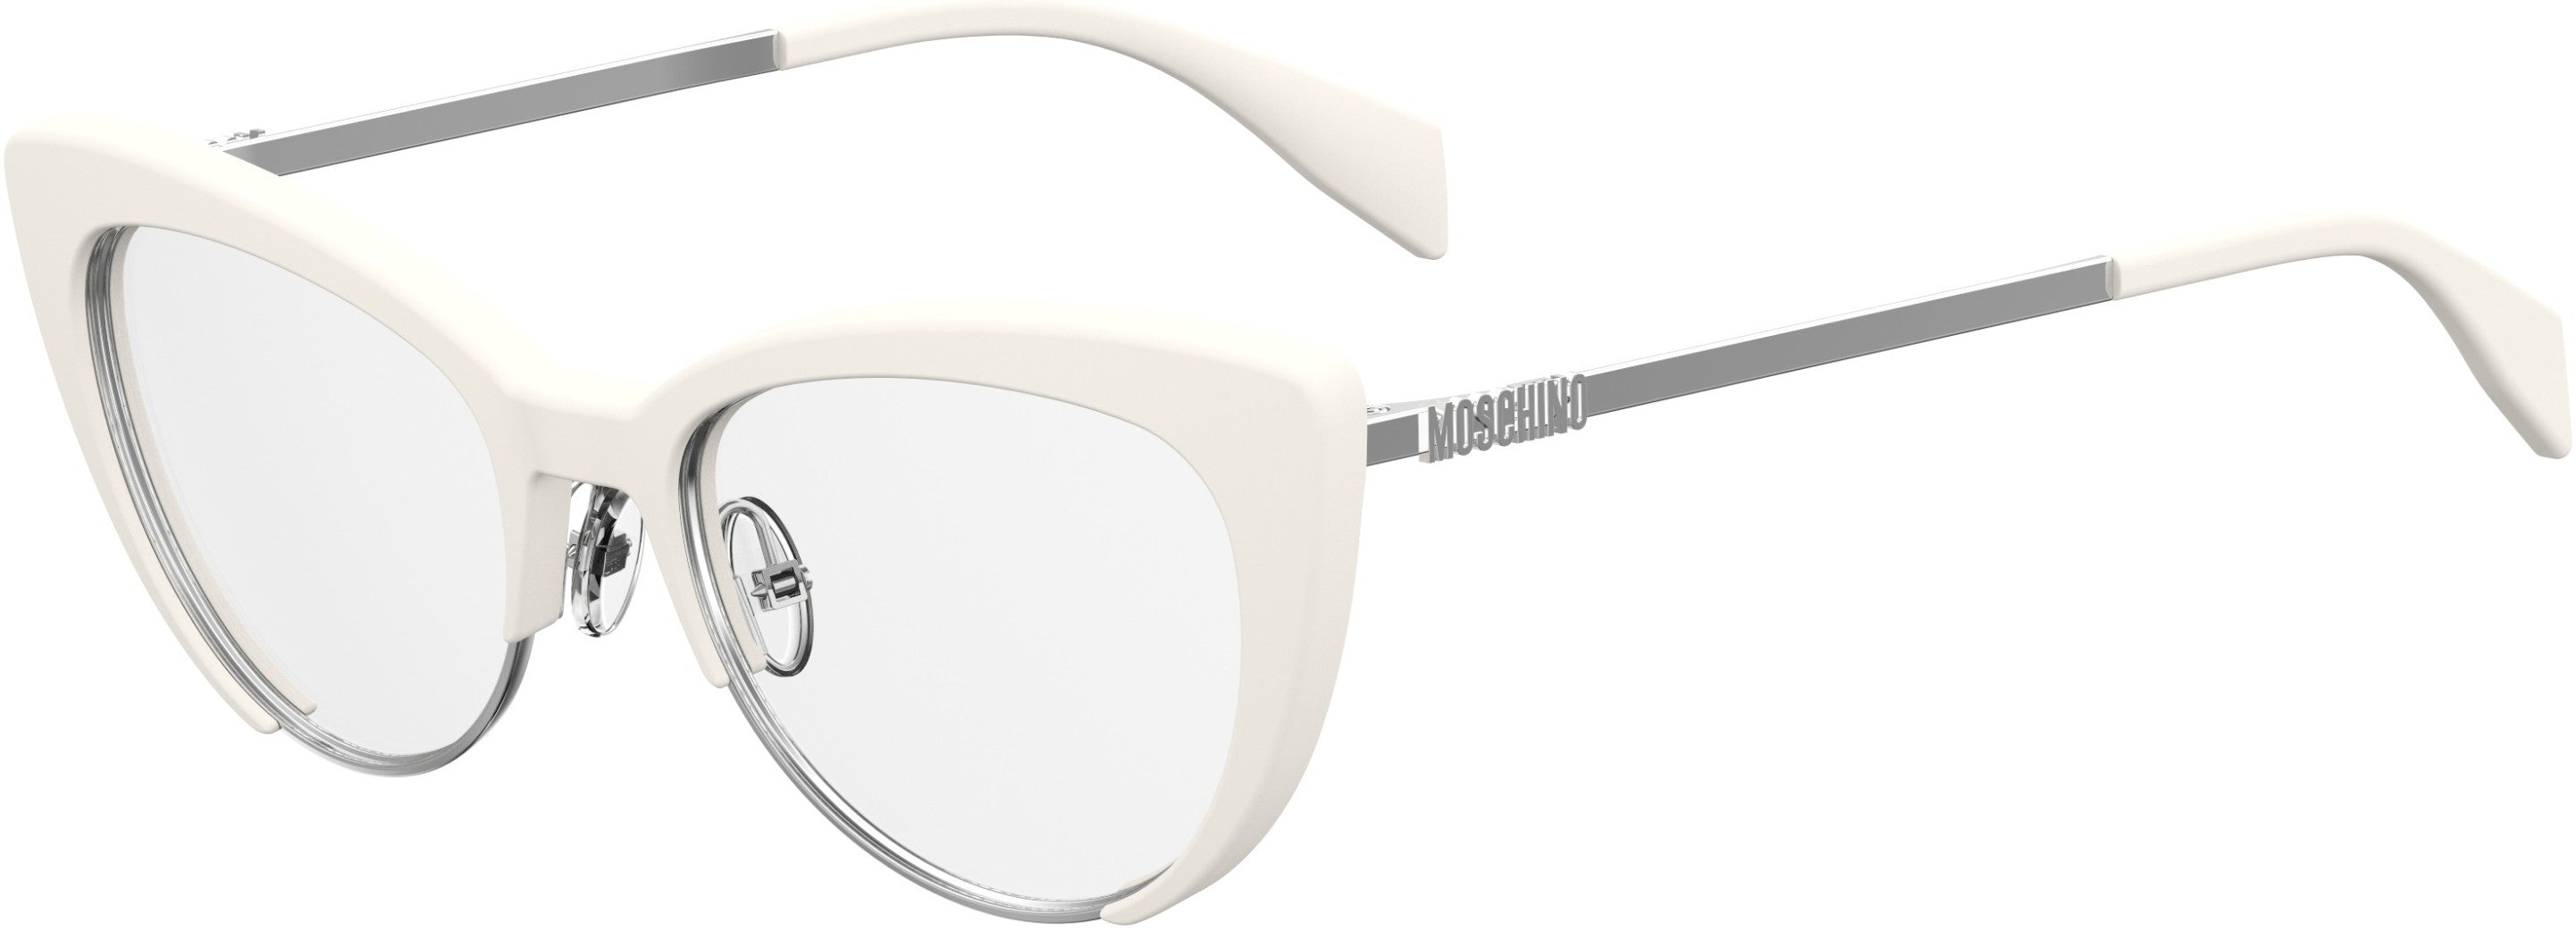  Moschino 521 Cat Eye/butterfly Eyeglasses 0VK6-0VK6  White (00 Demo Lens)